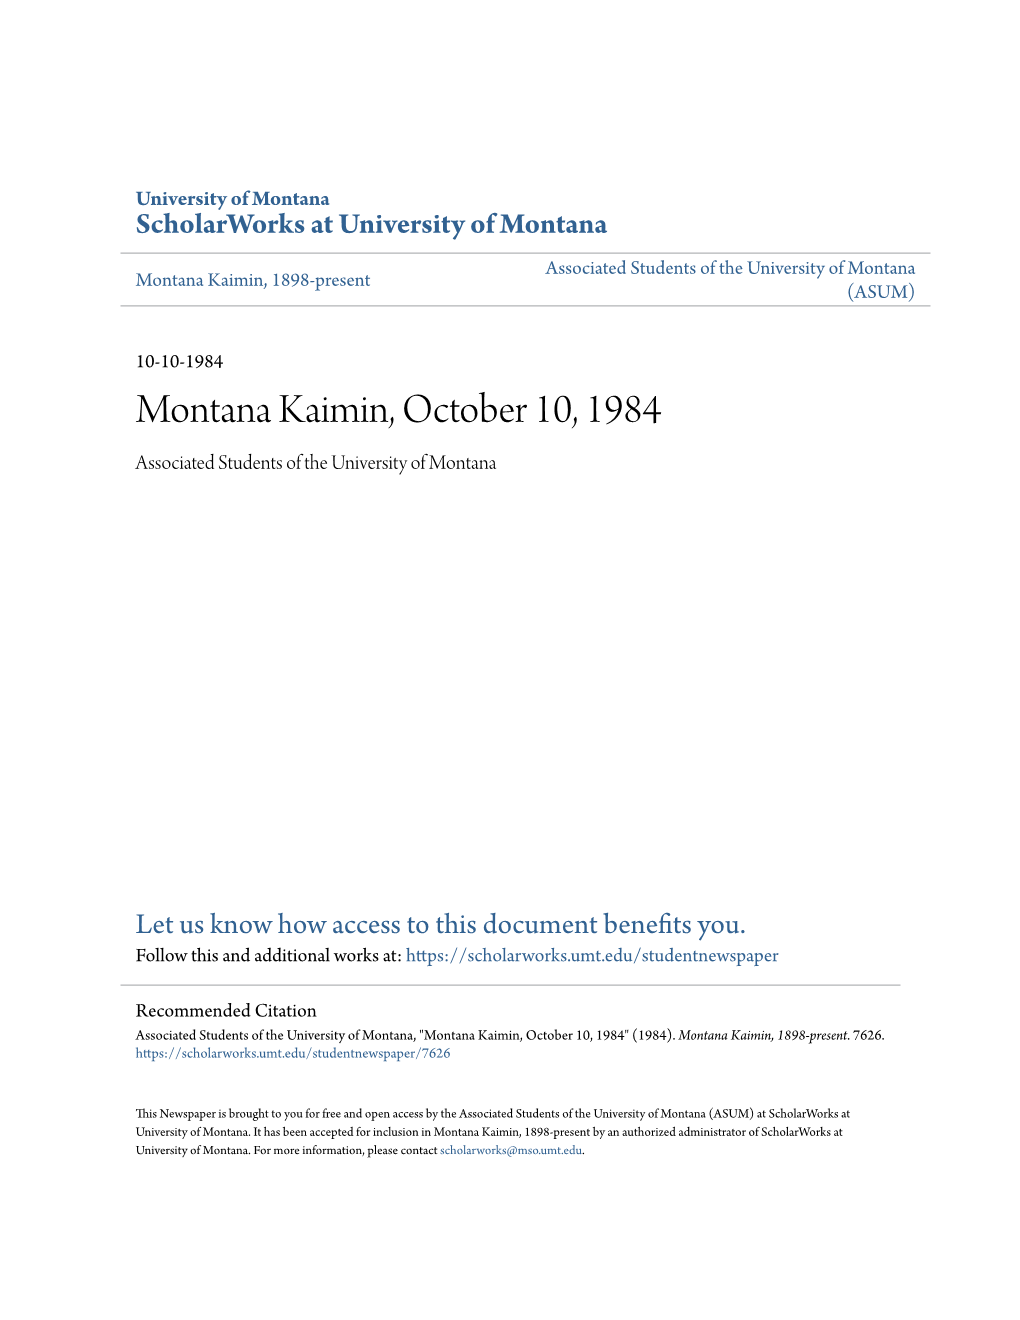 Montana Kaimin, October 10, 1984 Associated Students of the University of Montana